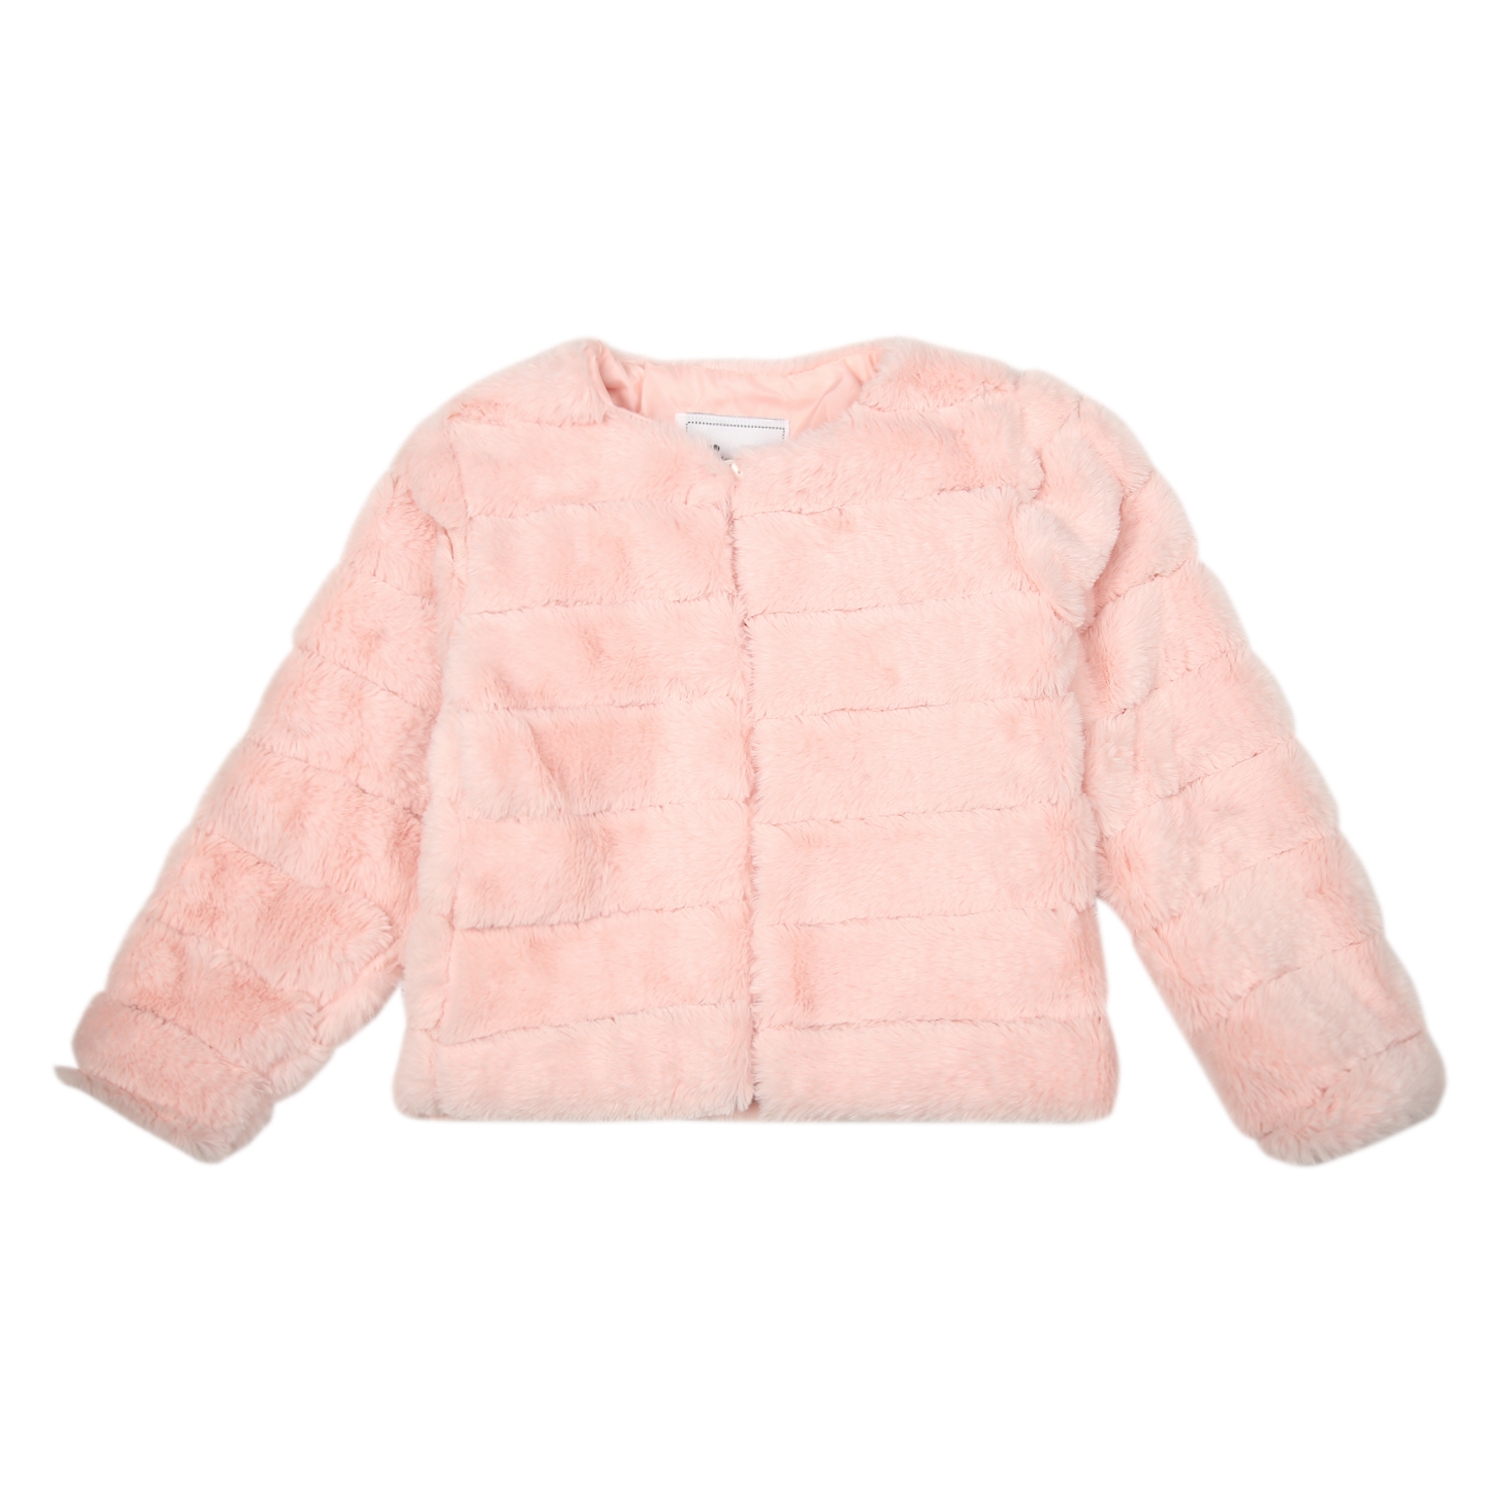 Mothercare | Girls Full Sleeves Jacket - Pink